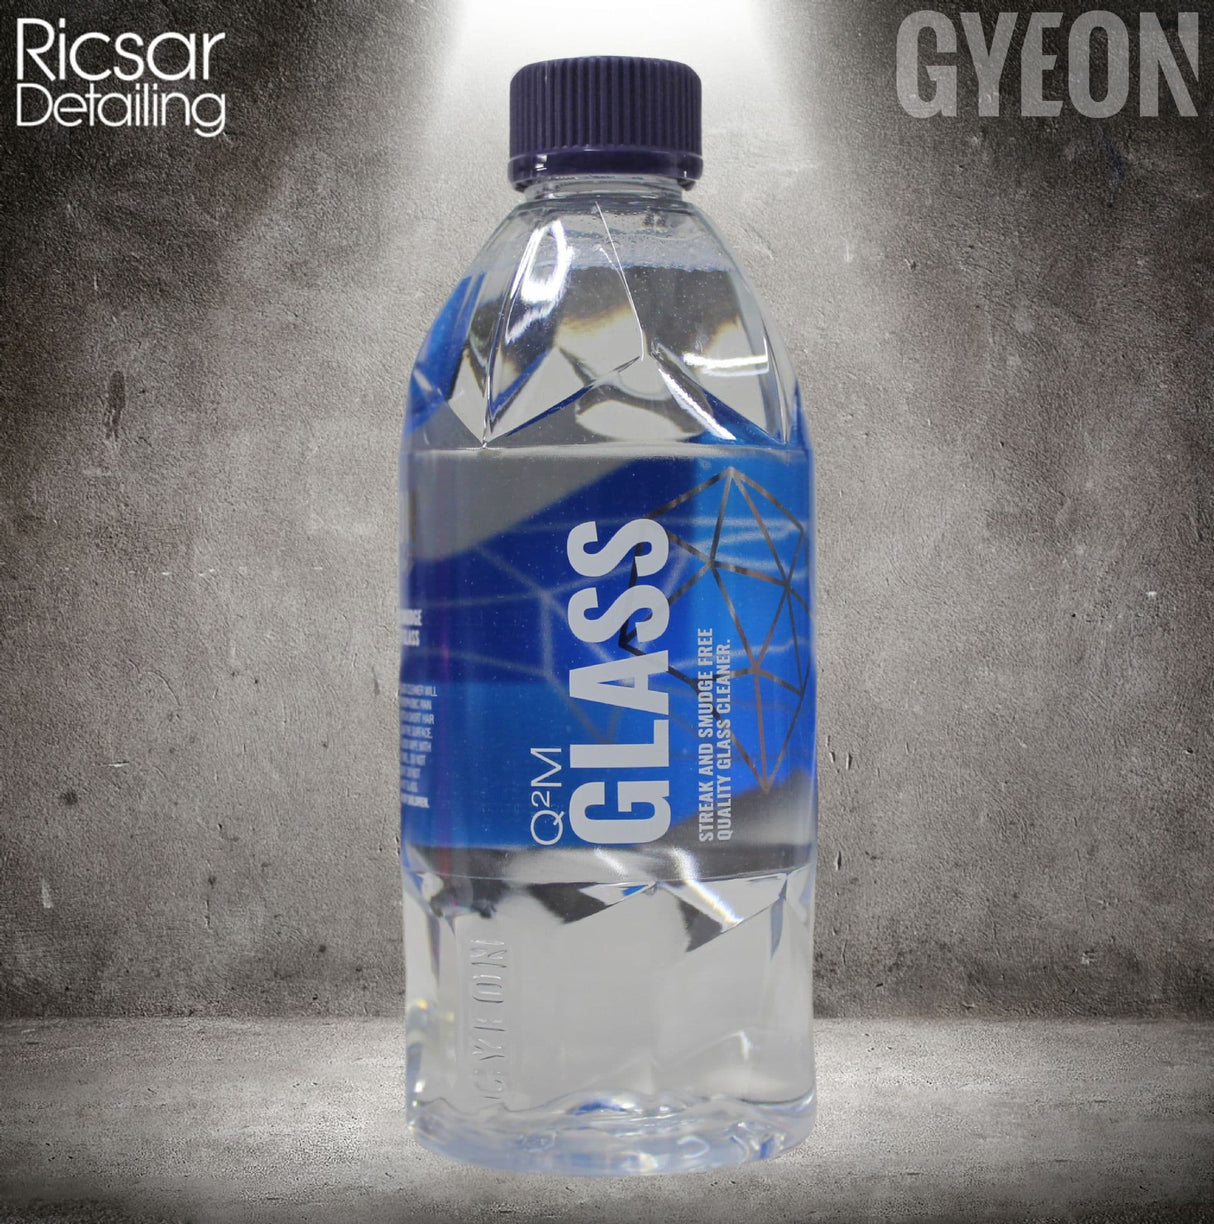 Gyeon Q2M Glass Cleaner